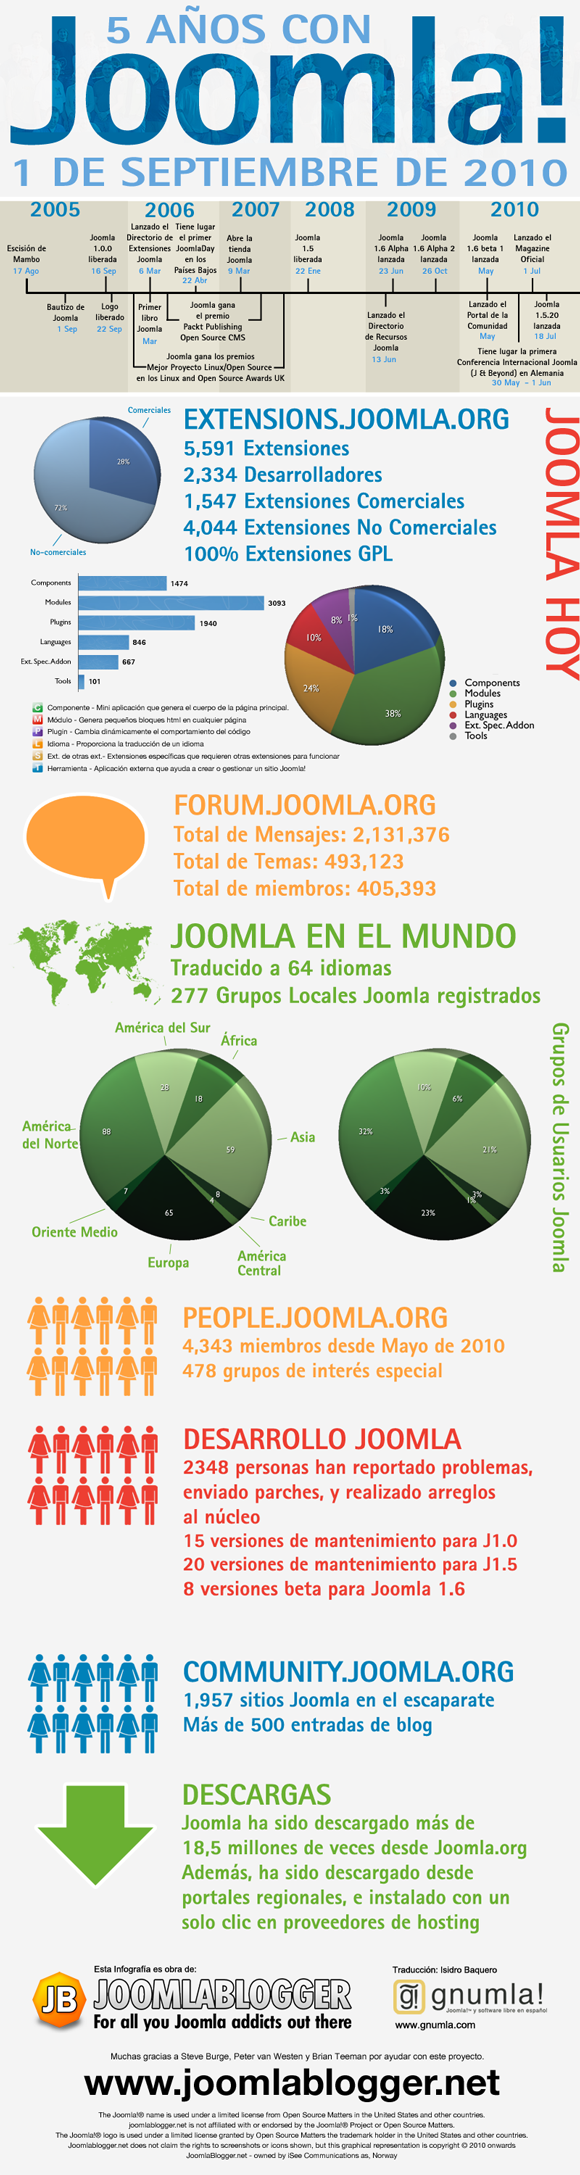 joomla-5-year-anniversary-infographic-es-580px